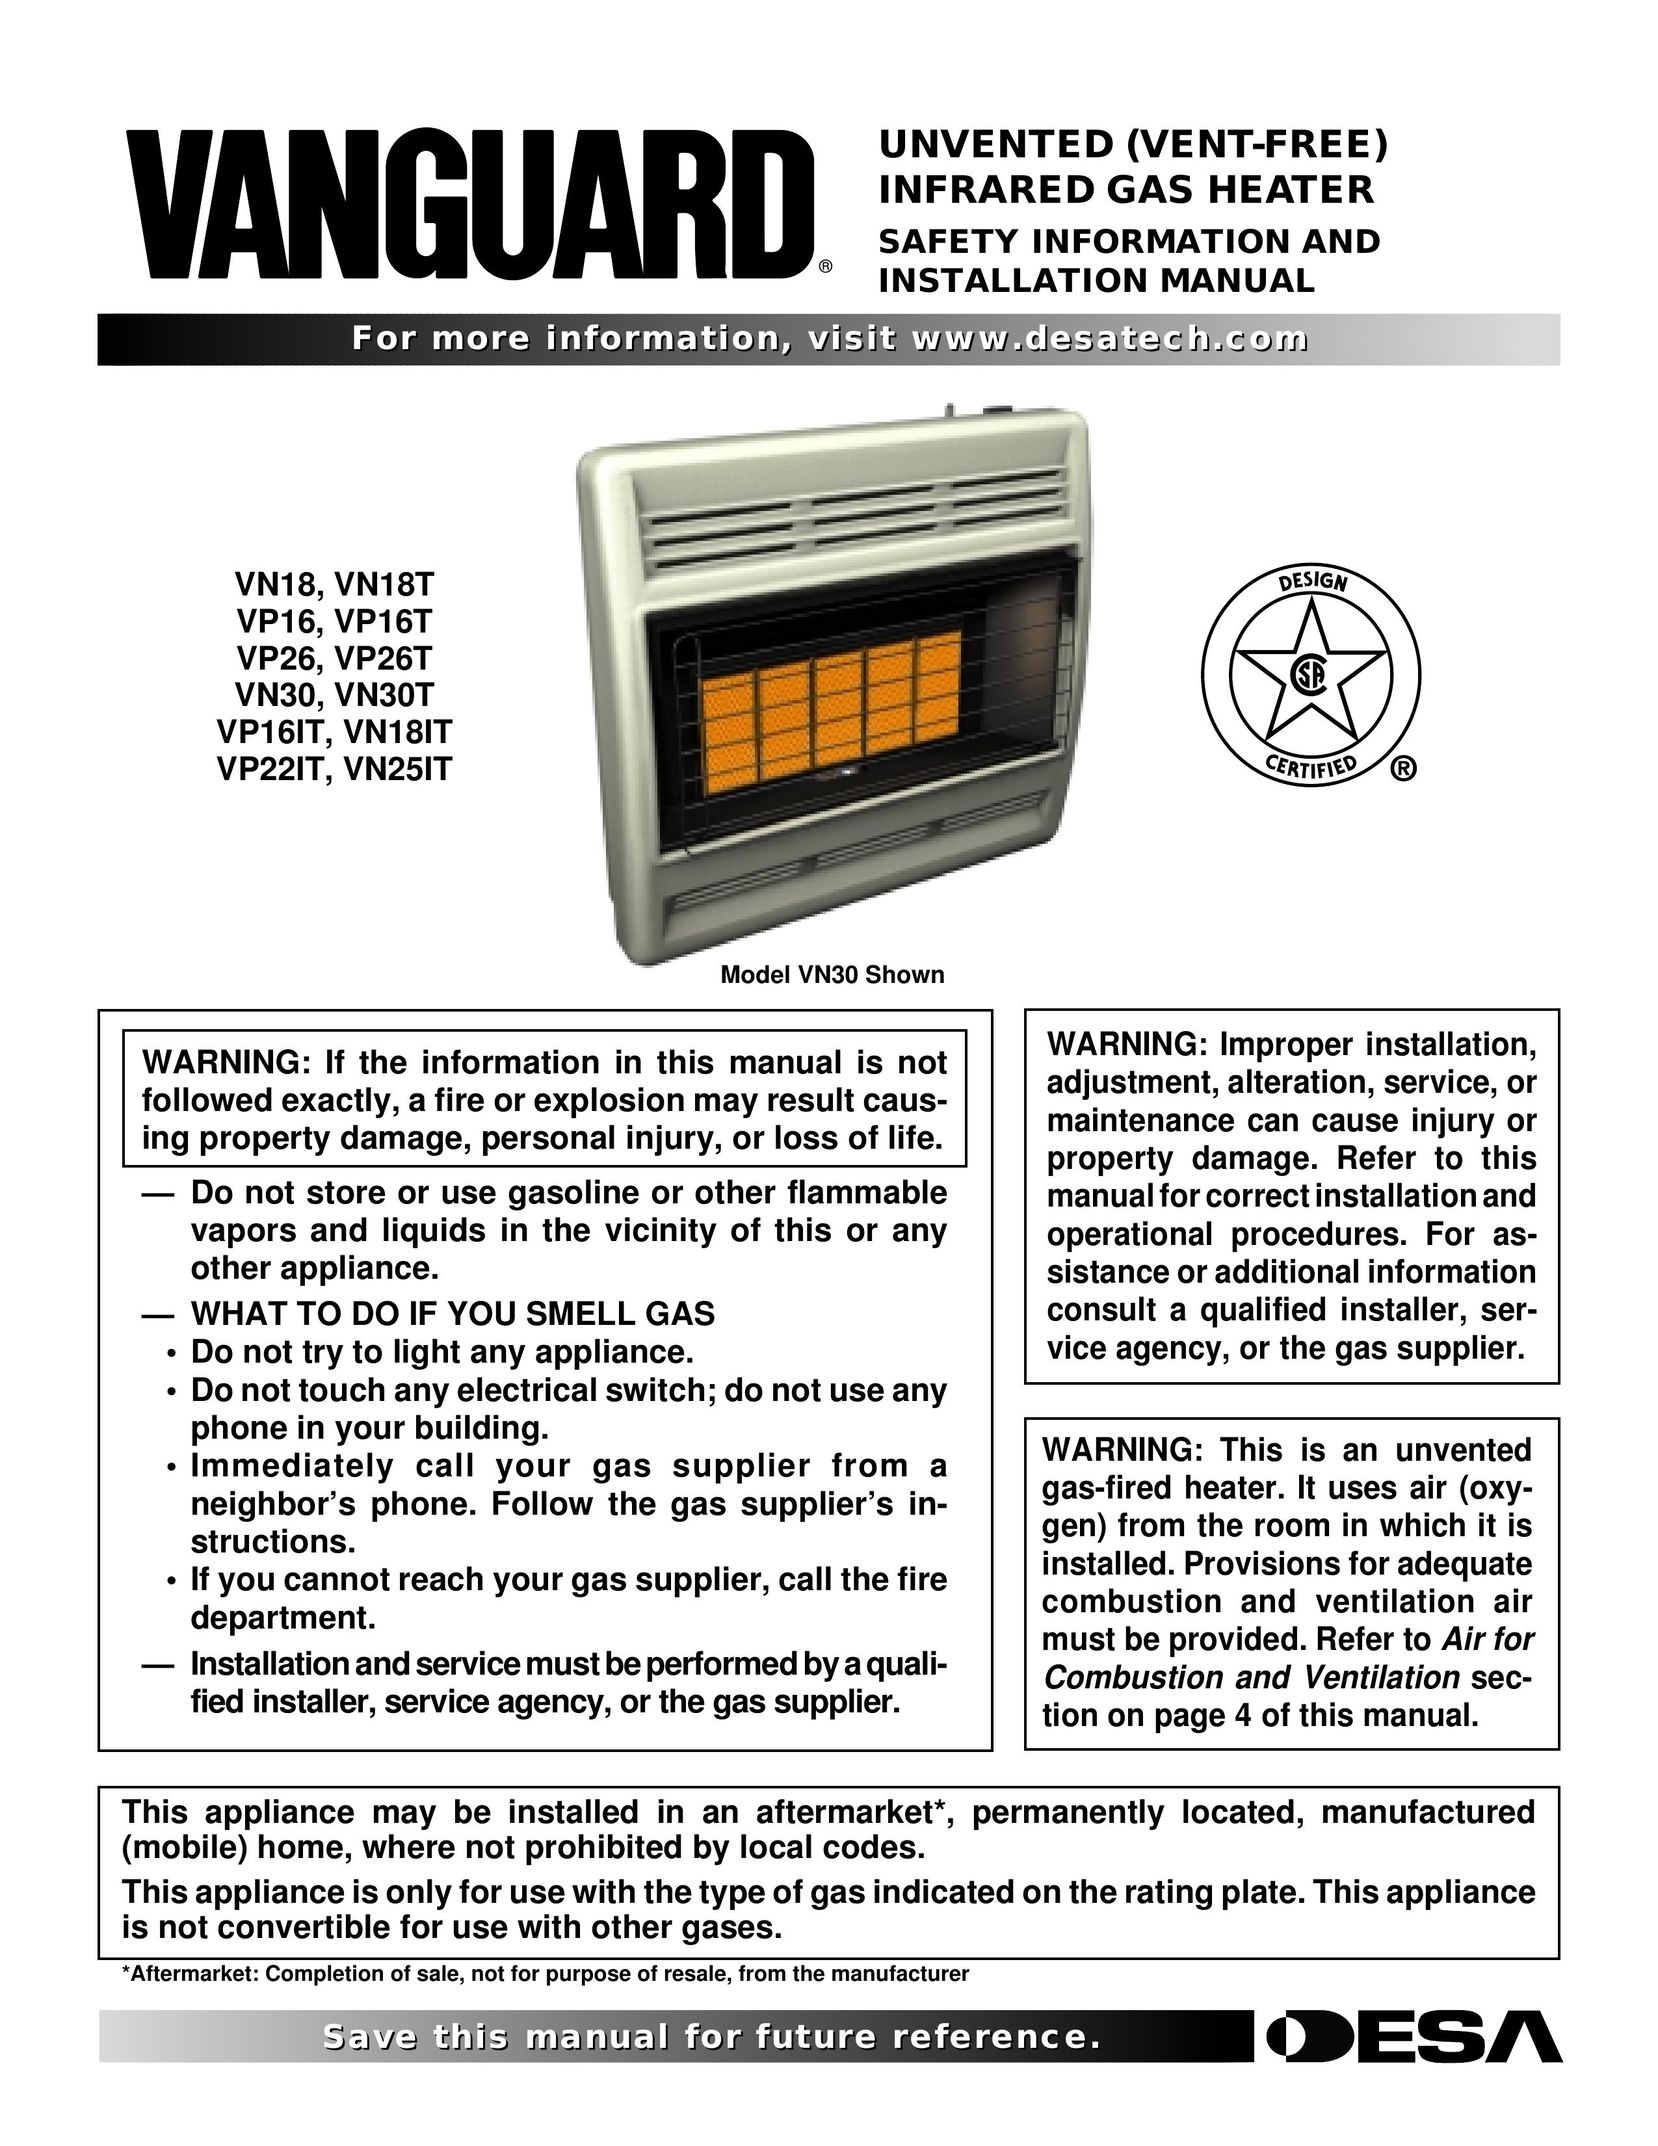 Vanguard Heating VN25IT Gas Heater User Manual